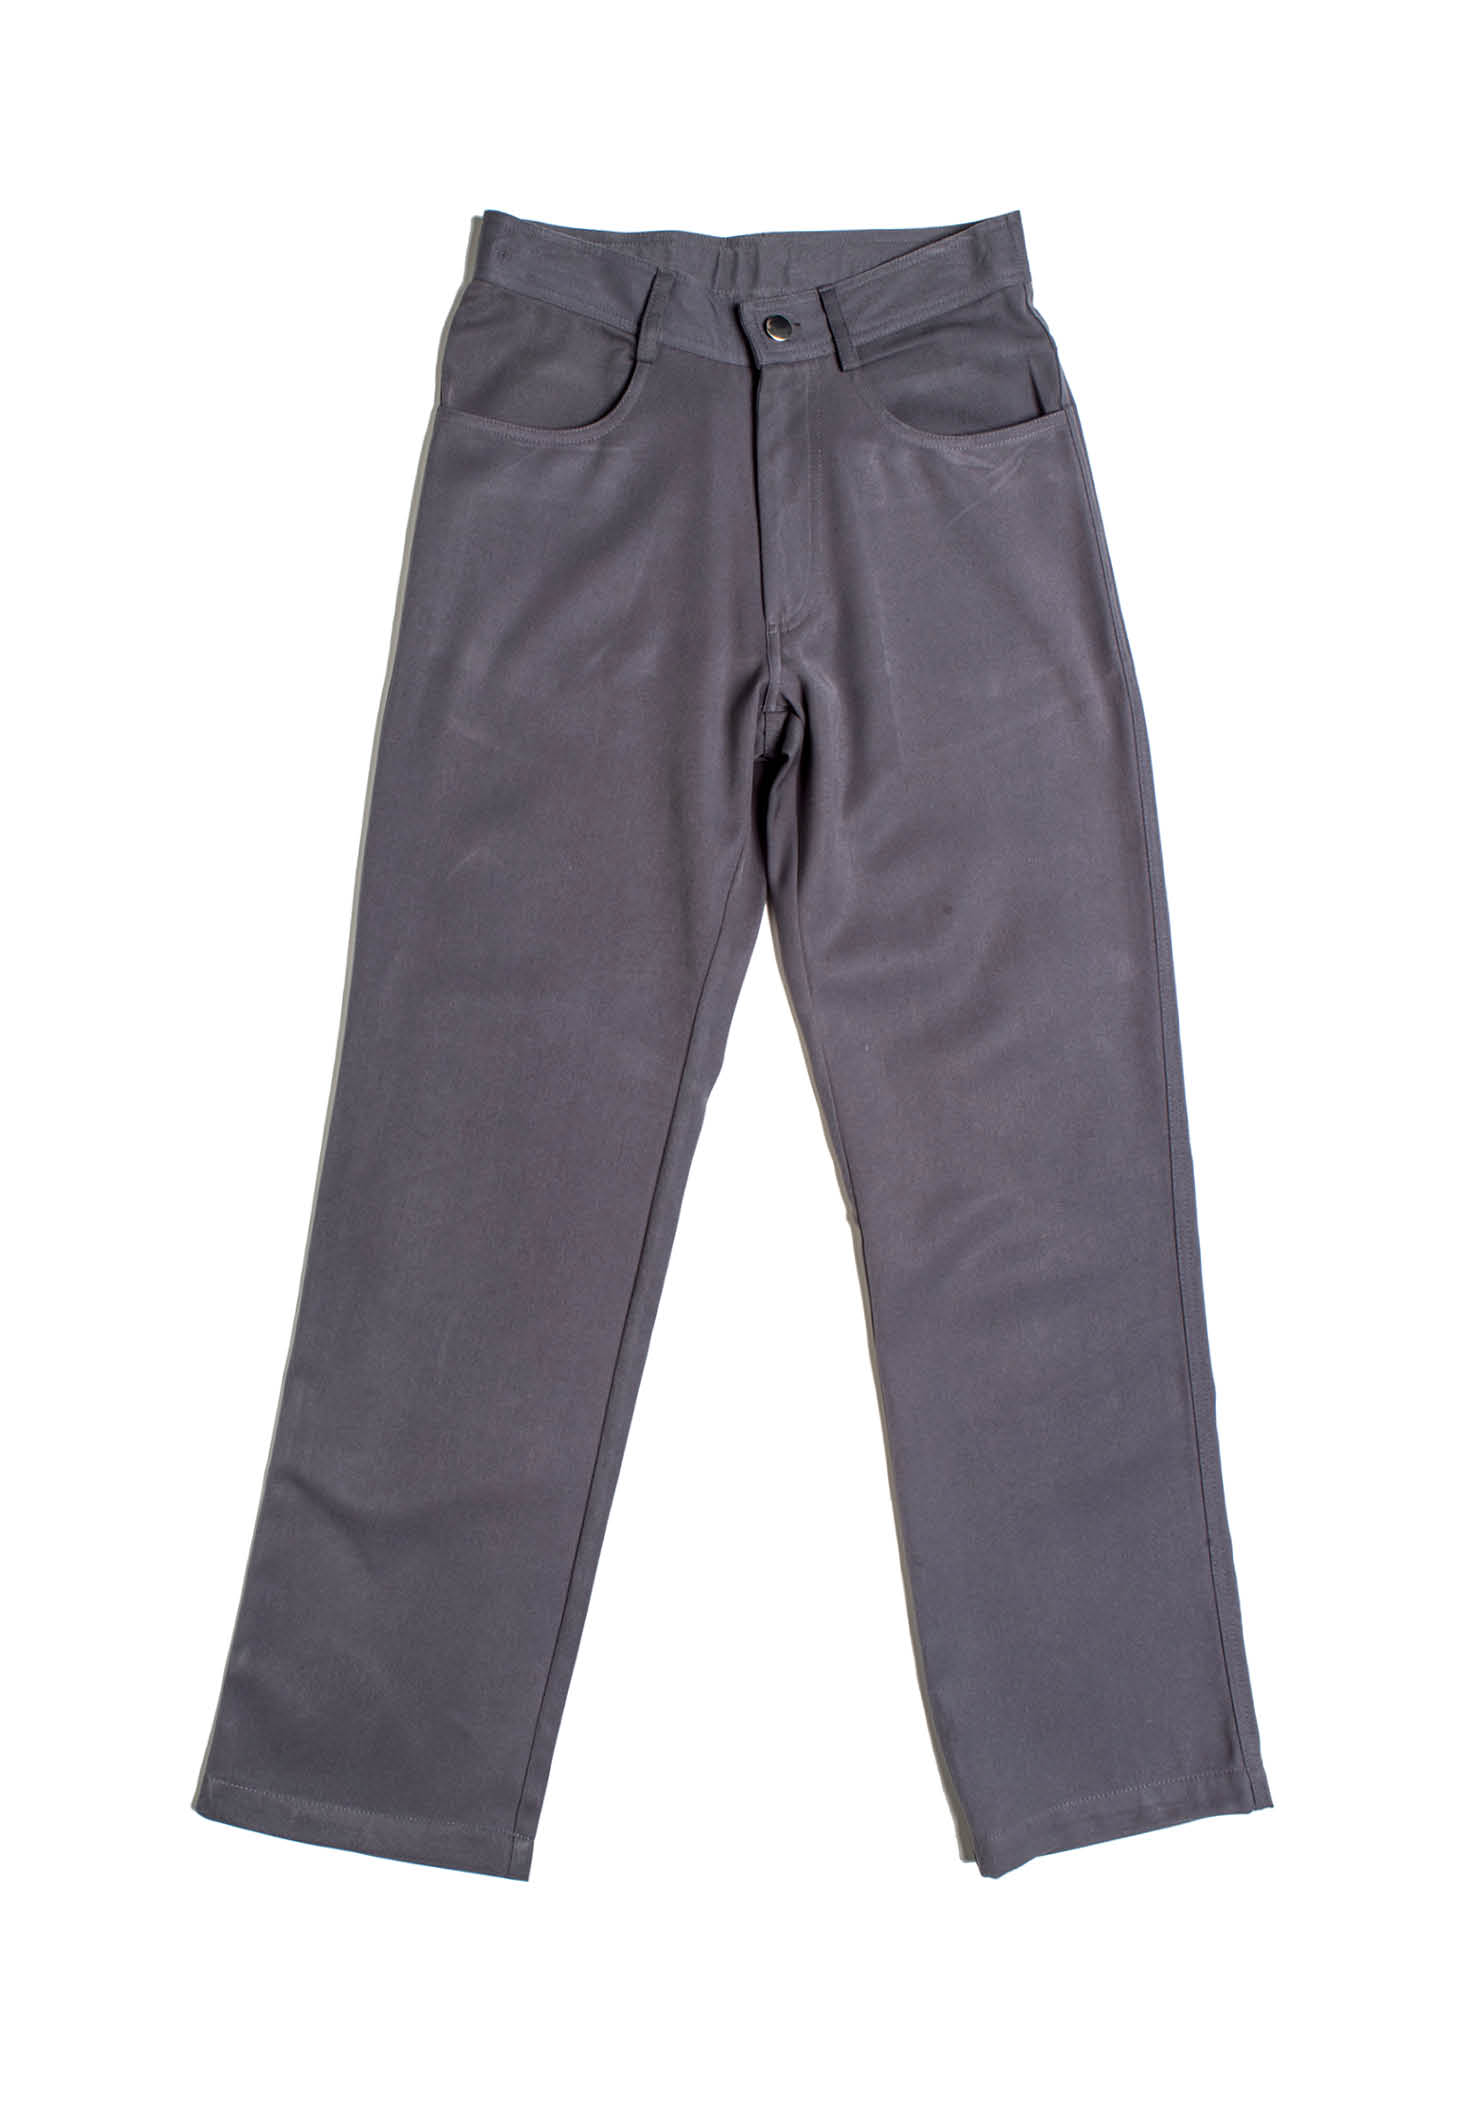 Ssc Leichhardt Boys Grey Gabardine Tailored Waist Pants | Shop at ...